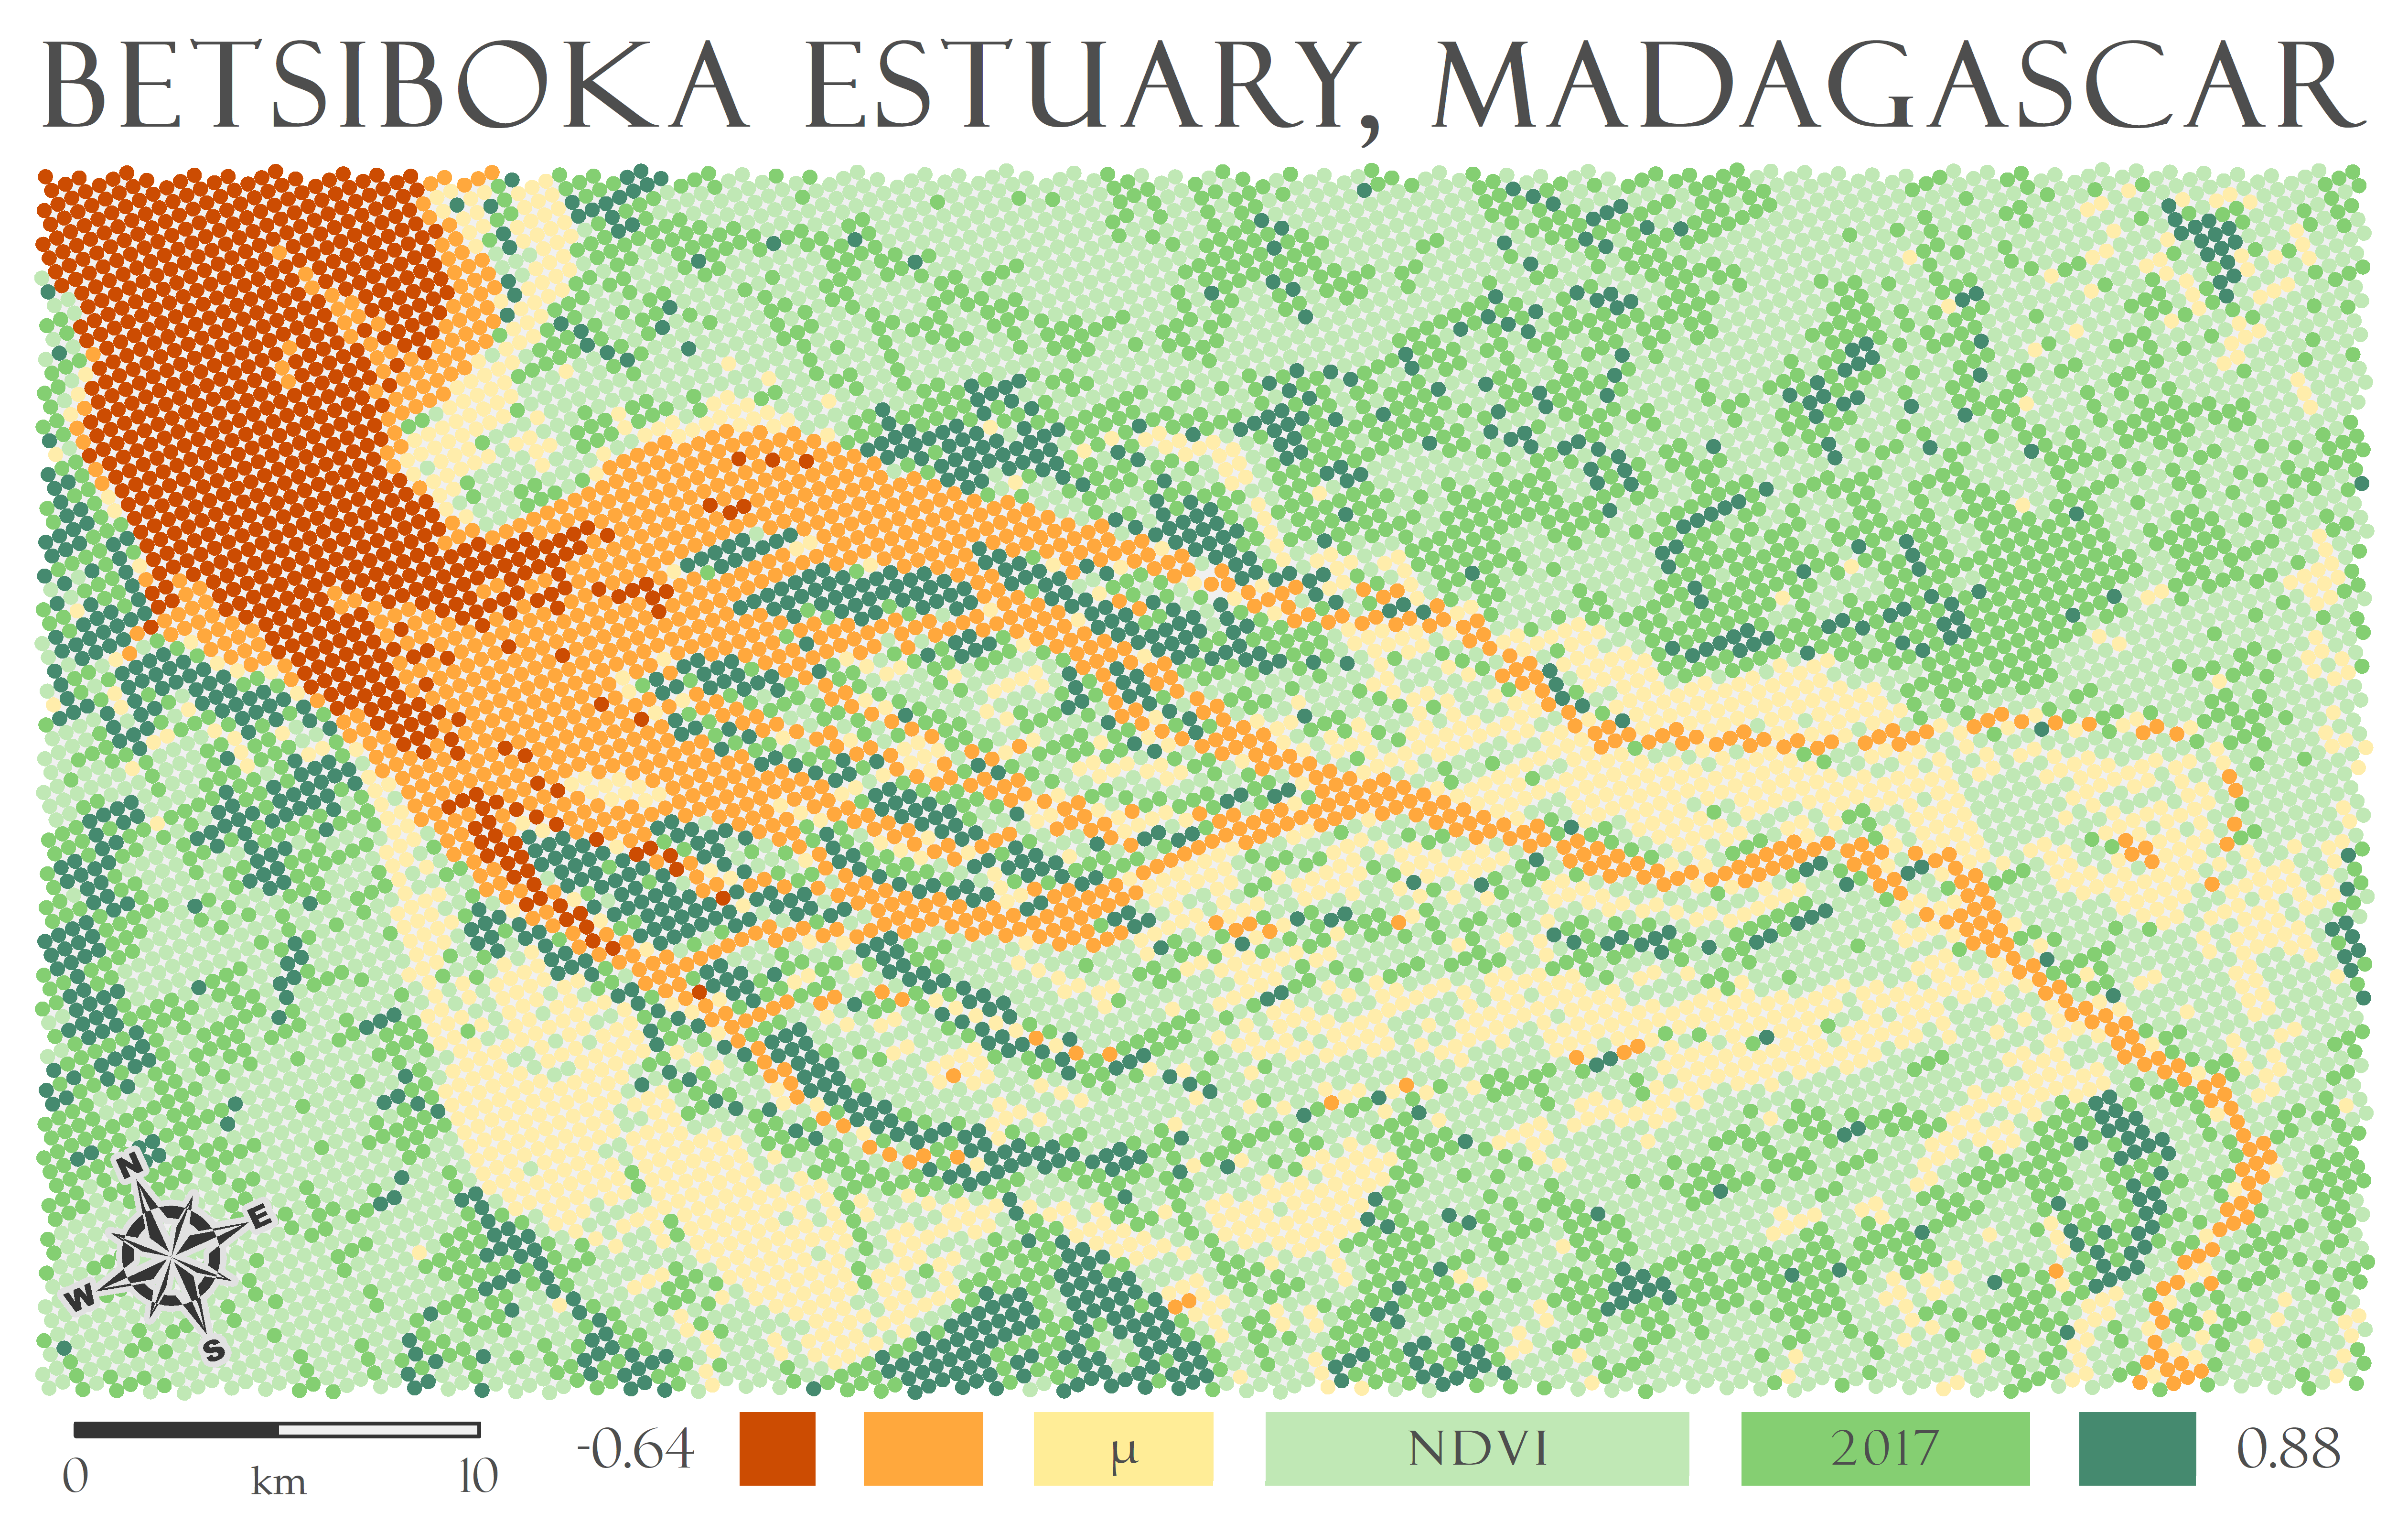 NDVI map of the Betsiboka Estuary in Madagascar.